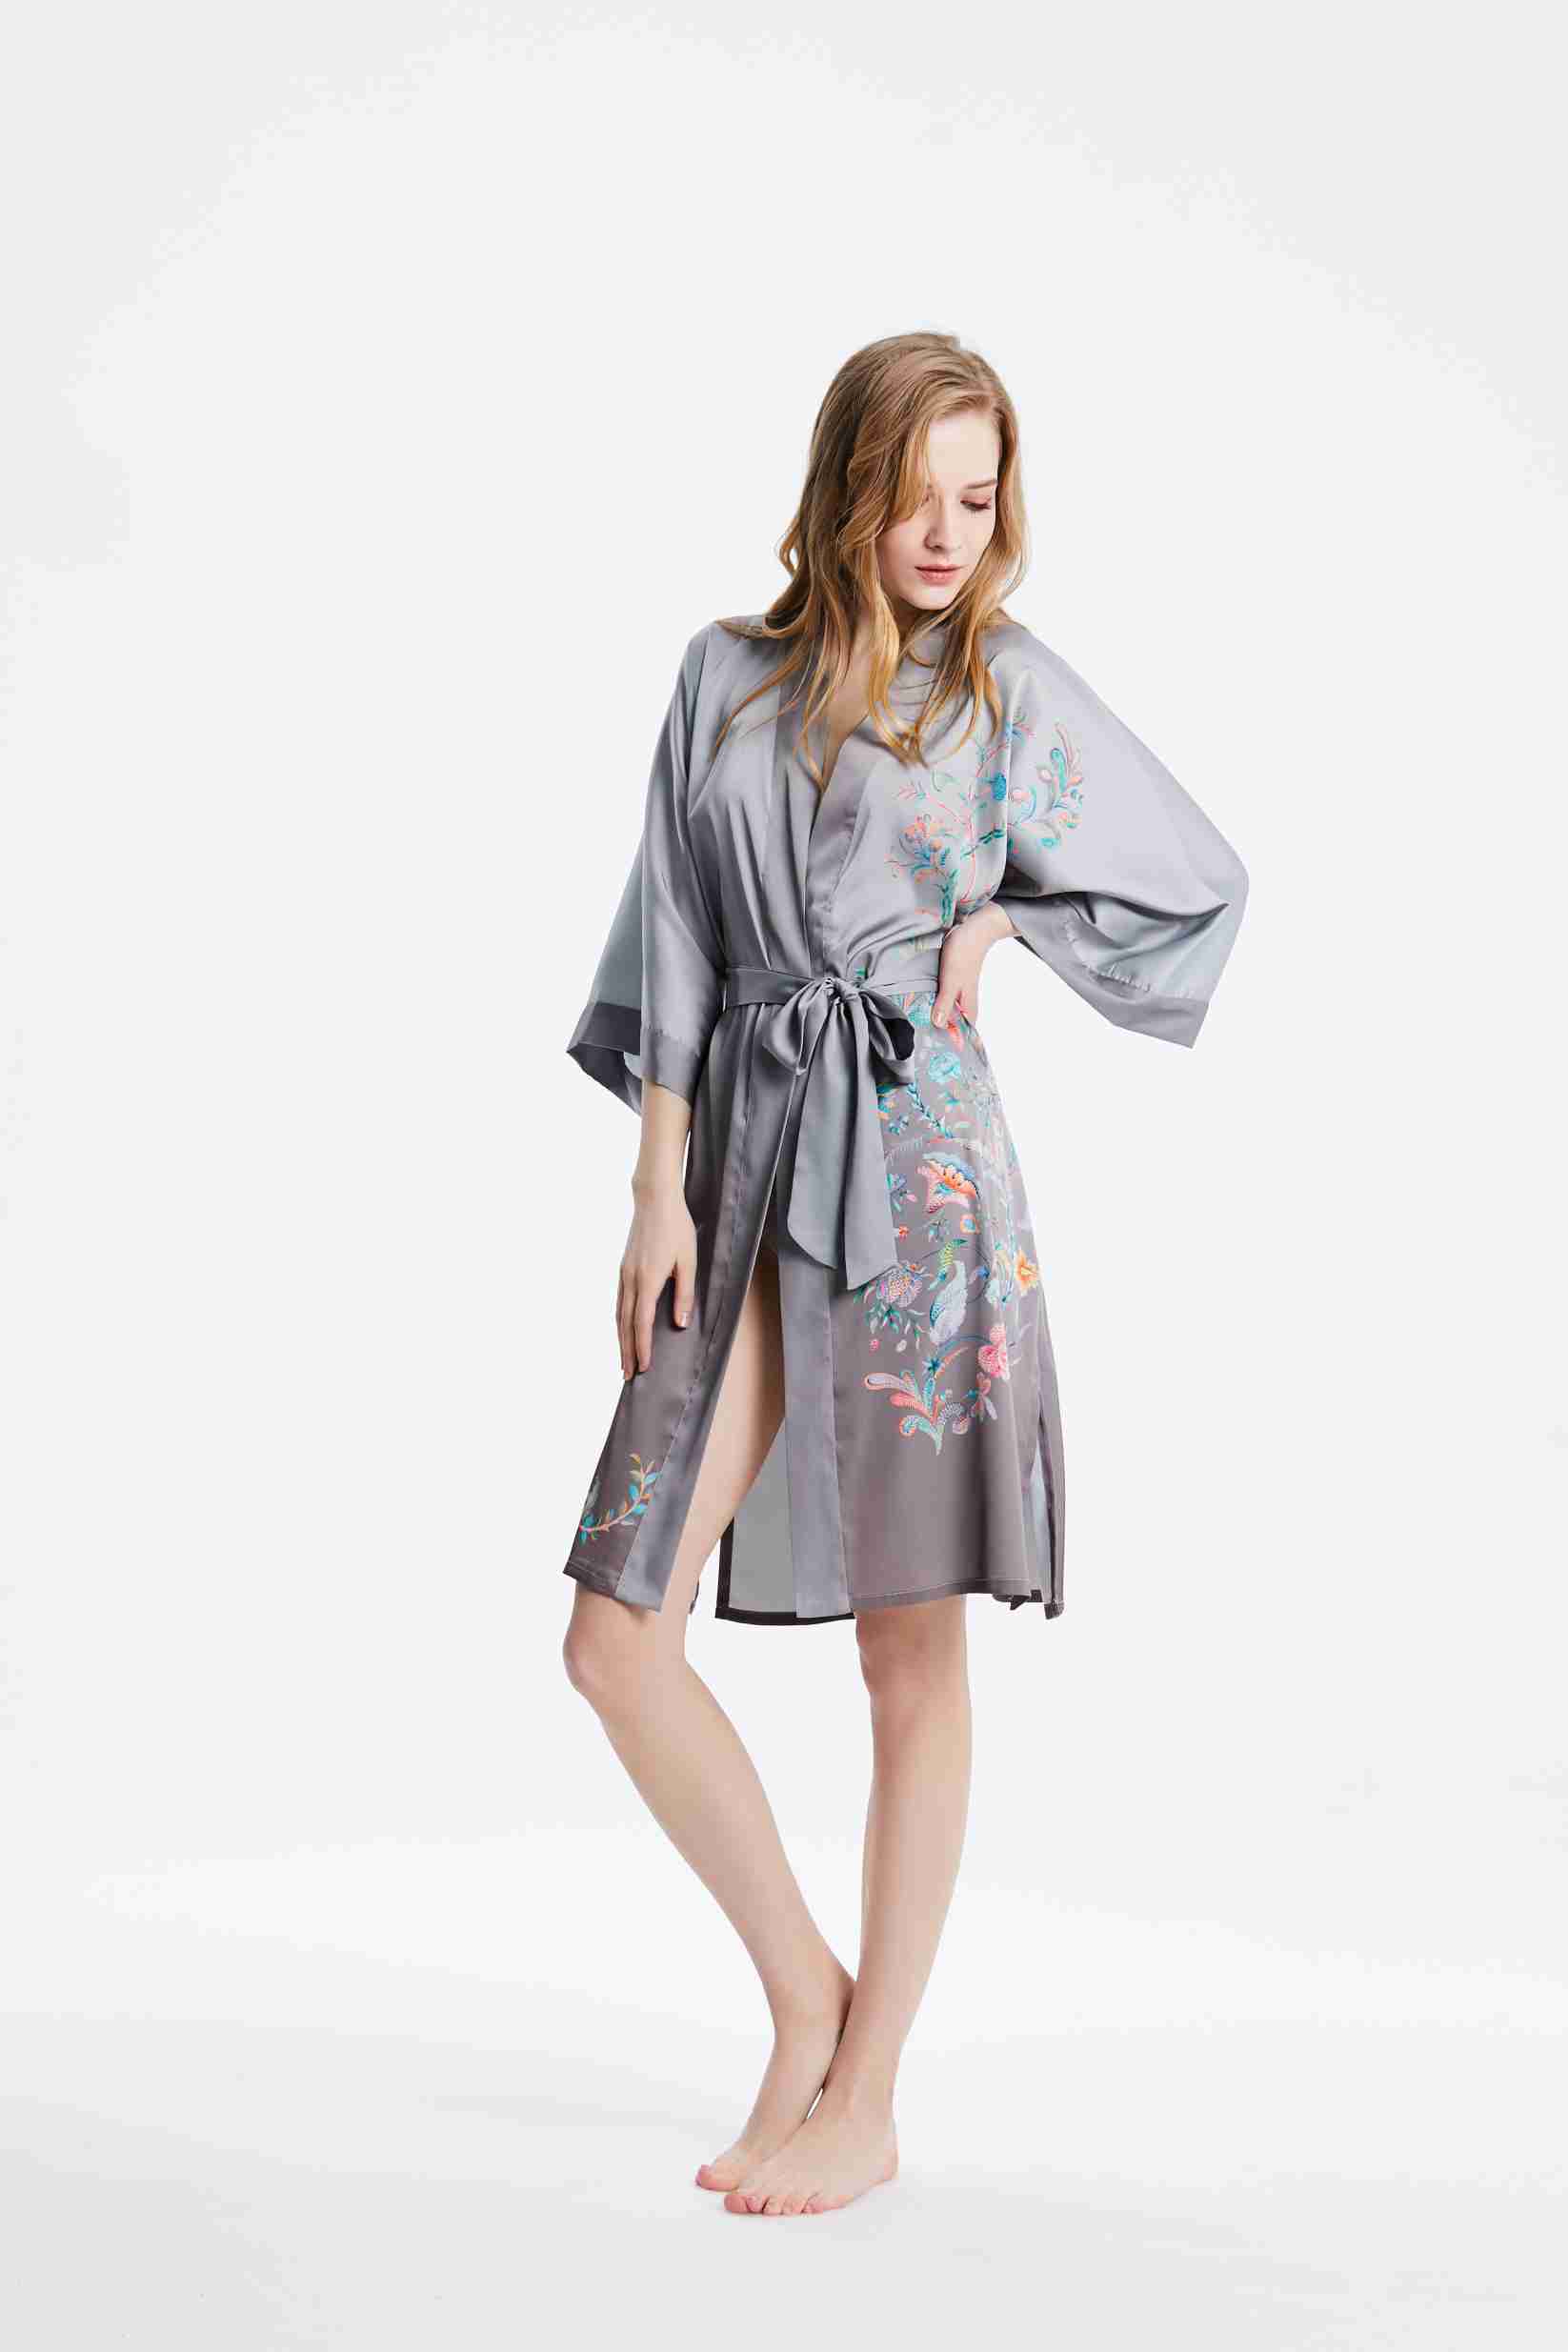 Best Ladies Washable Satin Silk Gray Color Floral Print Kimono Bathrobe Nightgown Bulk buy Wholesale